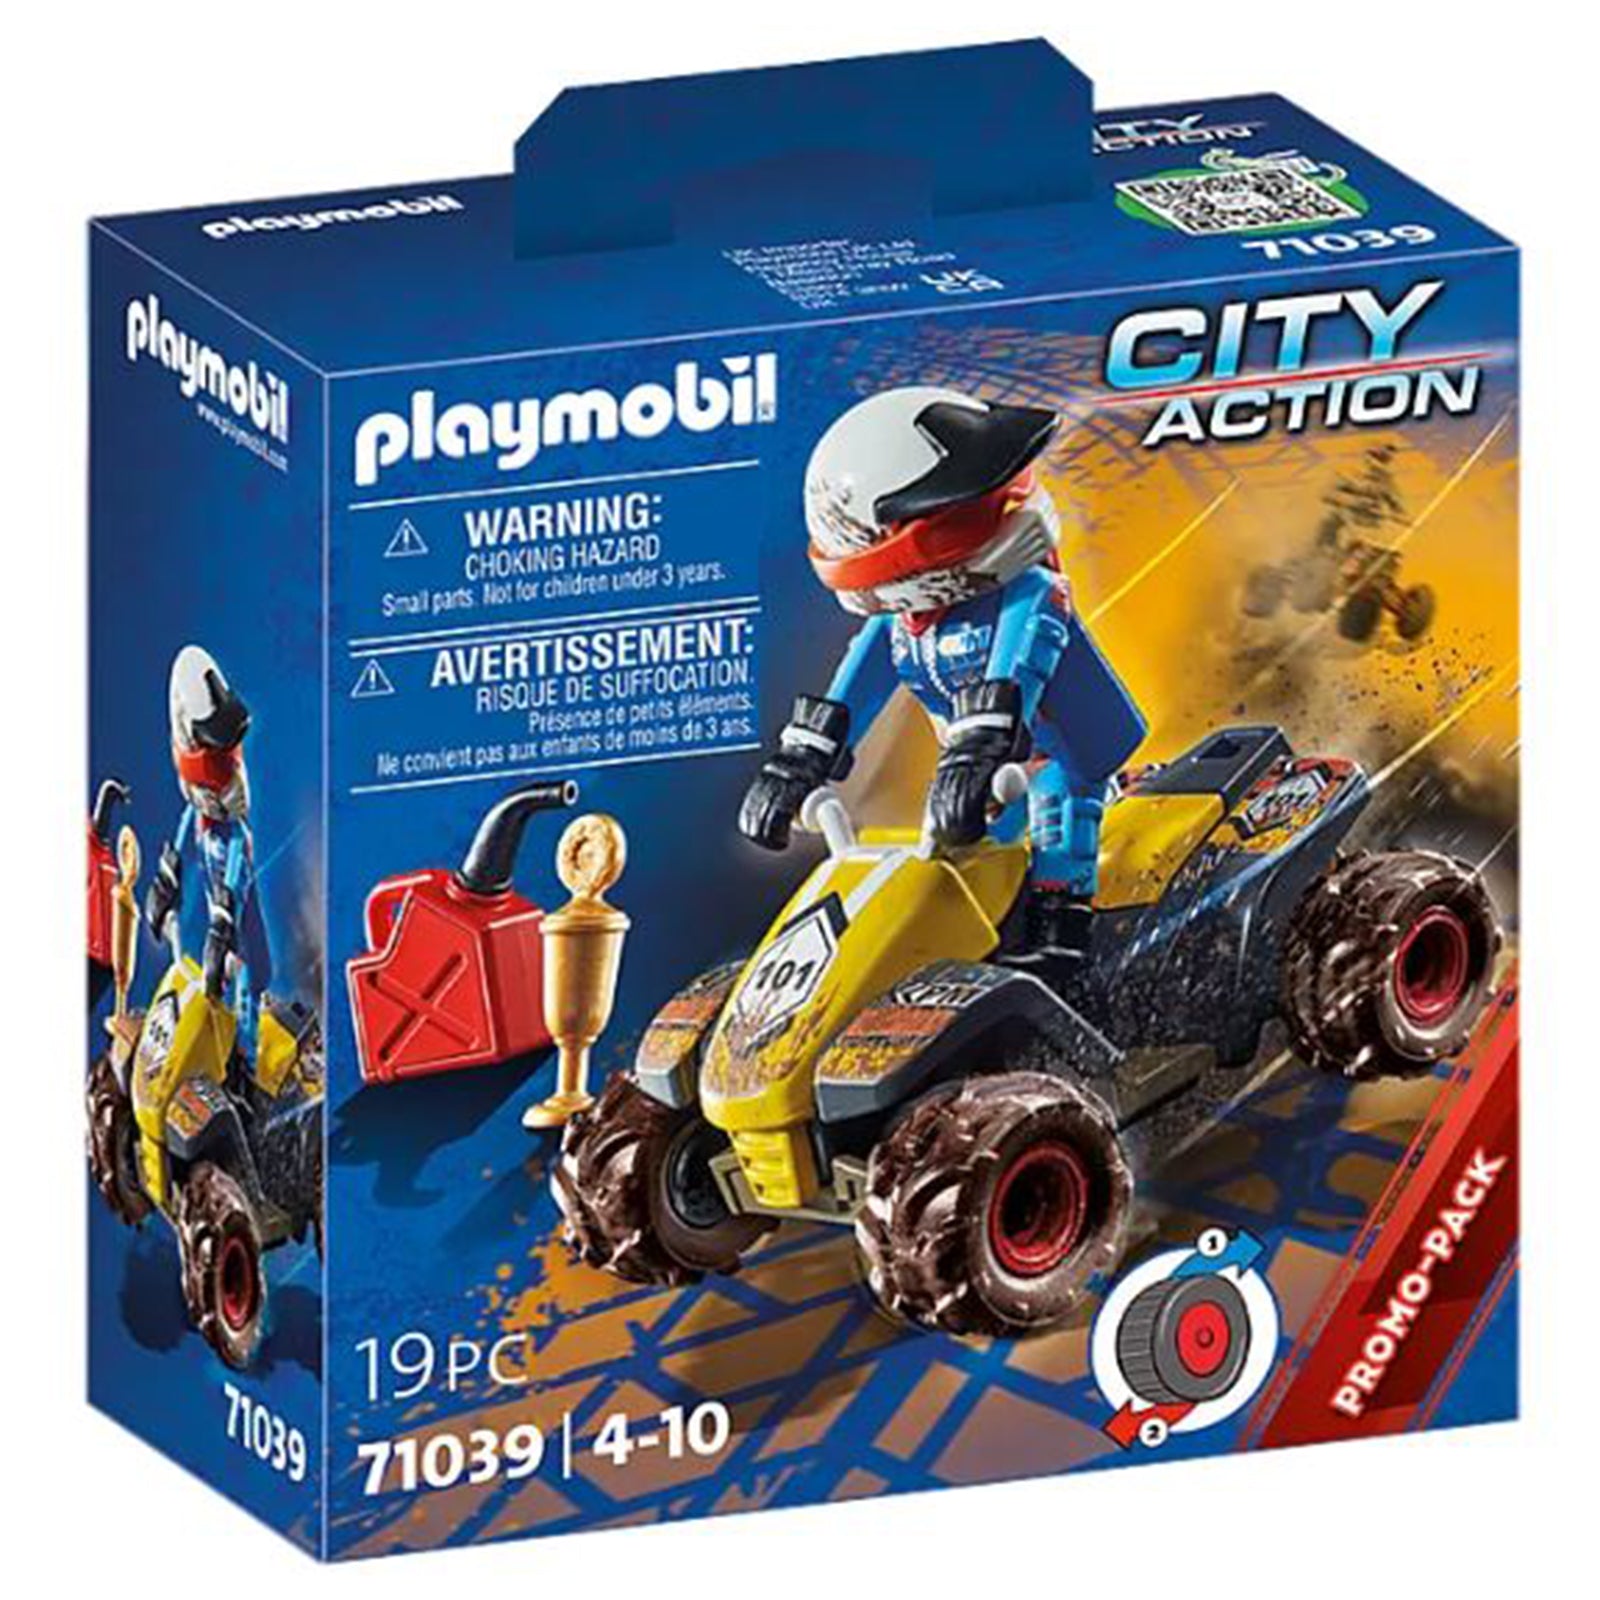 moe sensatie weg Playmobil City Action Racing Quad Building Set 71039| Radar Toys